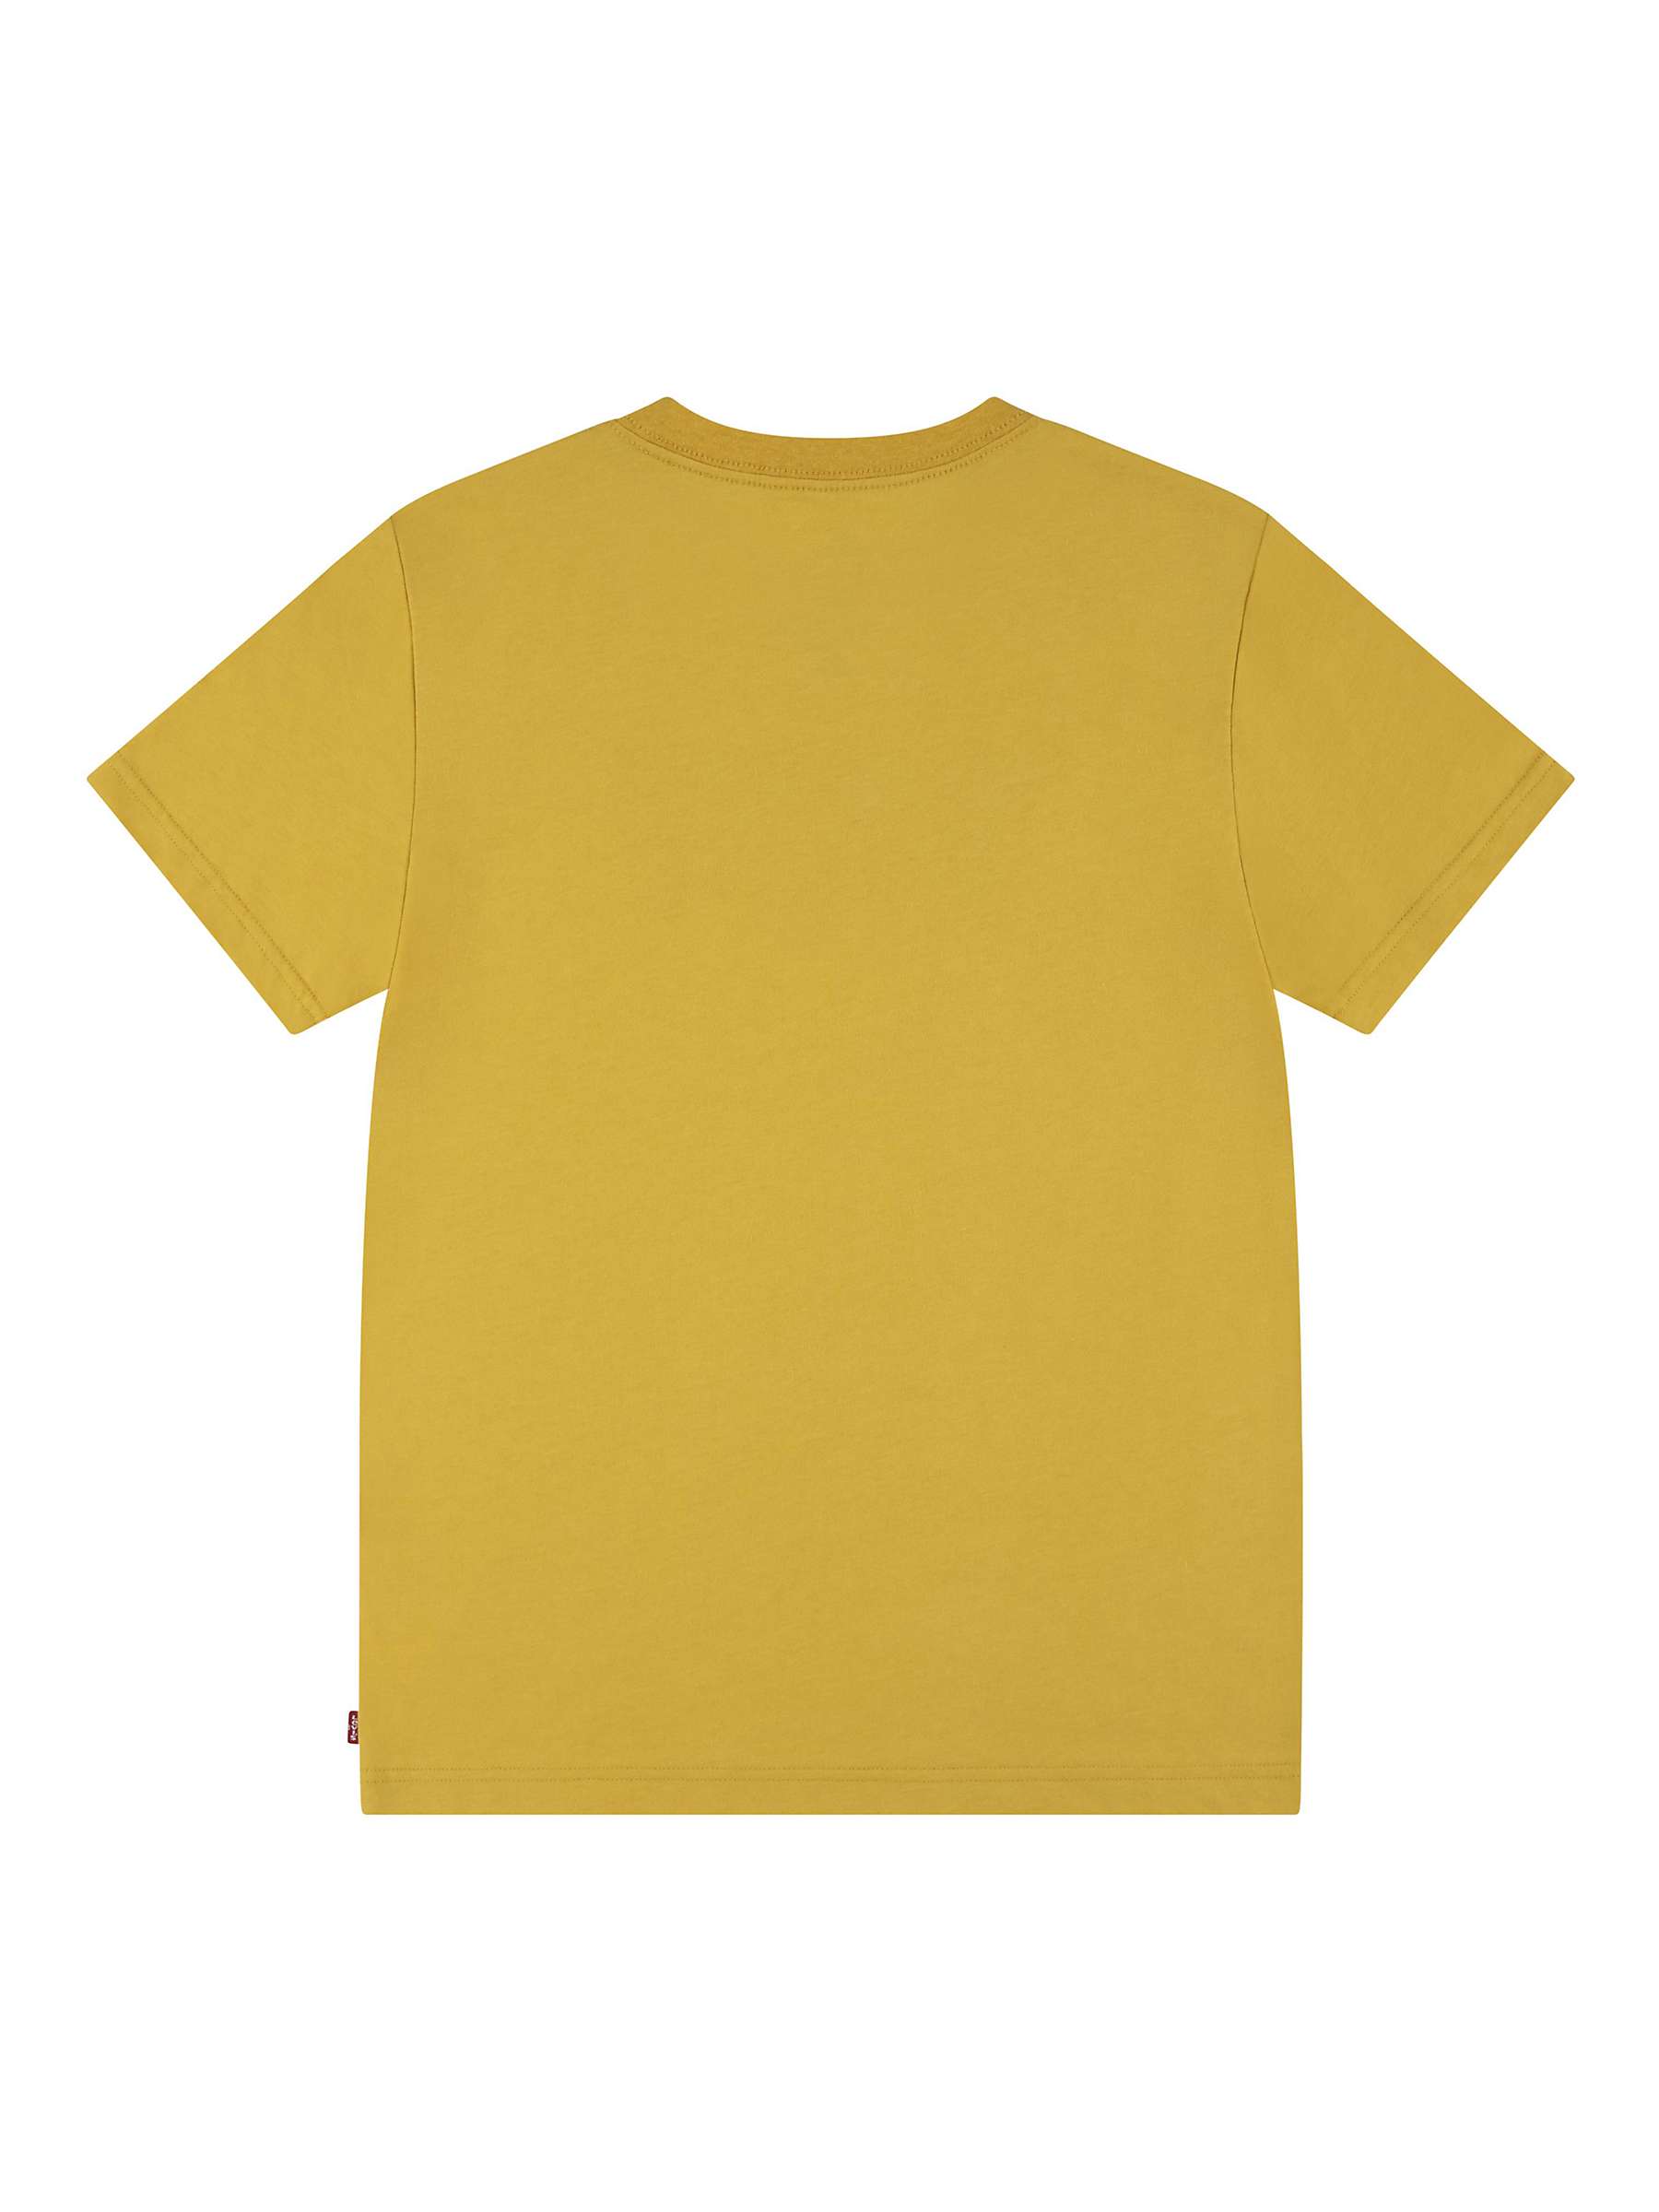 Buy Levi's Kids' Short Sleeve Batwing Logo T-Shirt Online at johnlewis.com